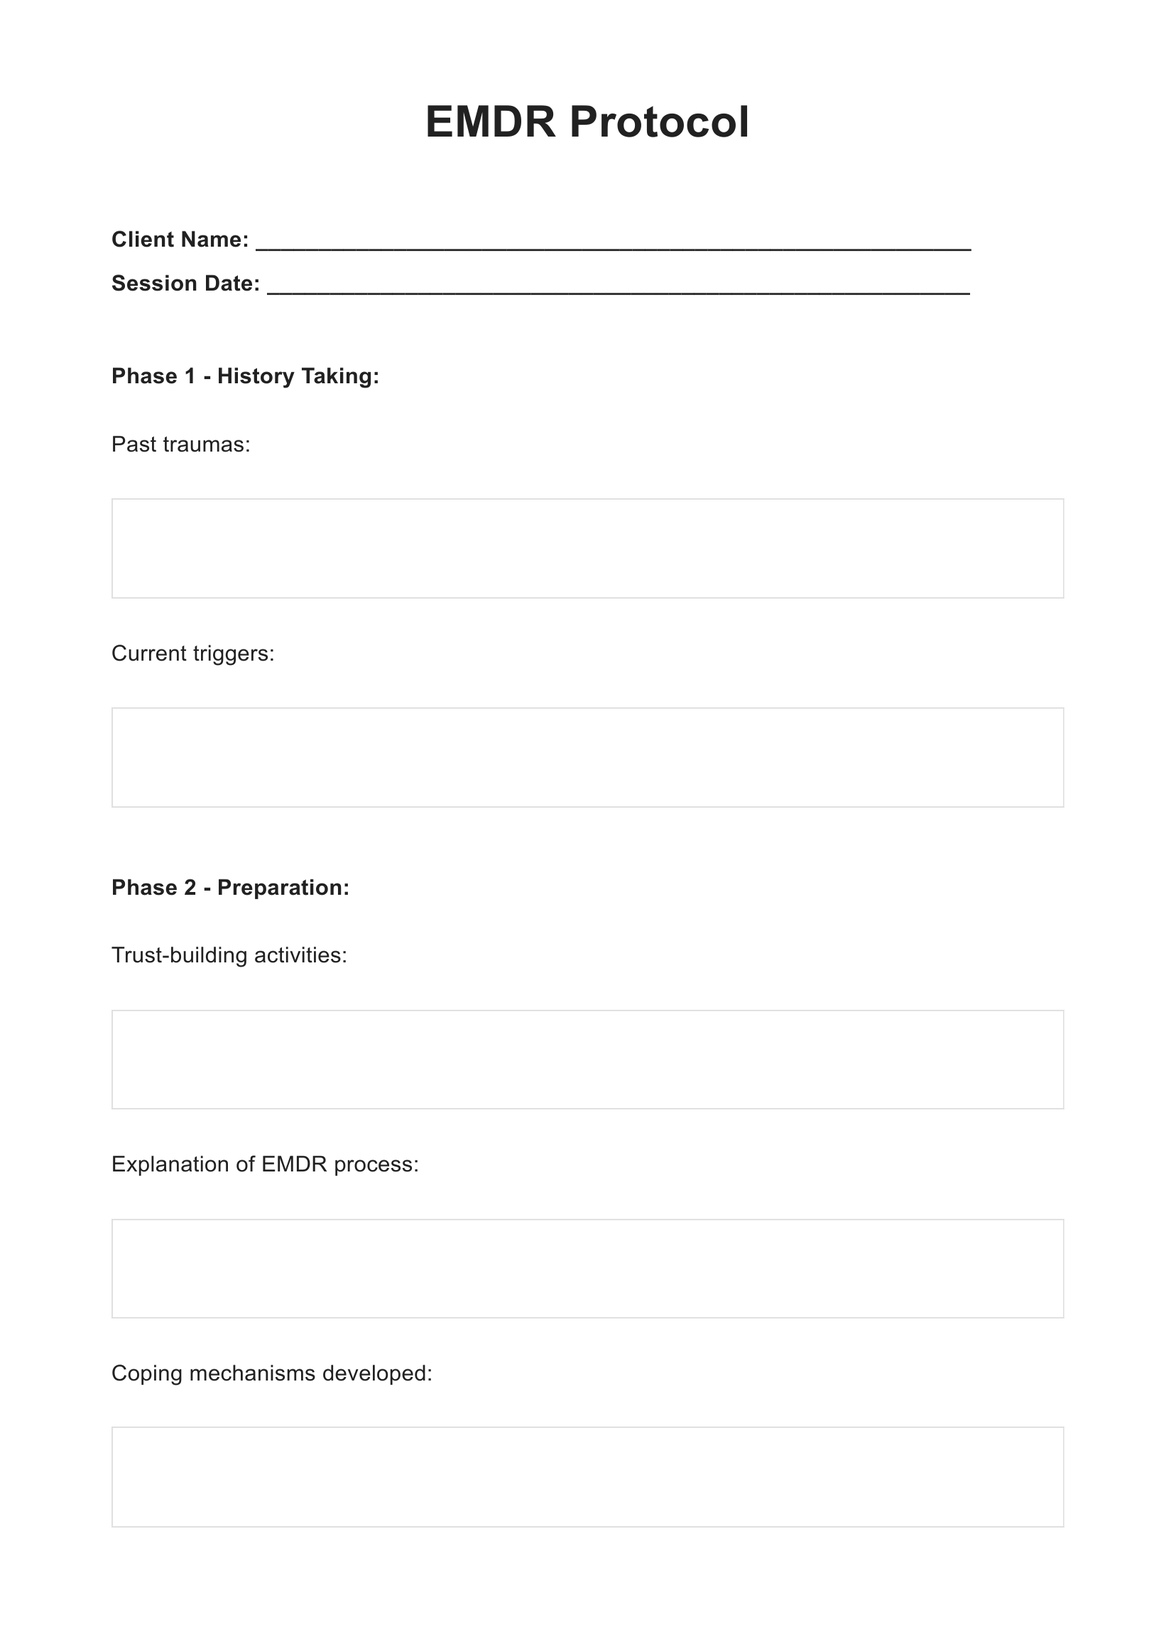 EMDR Protocol PDF Example